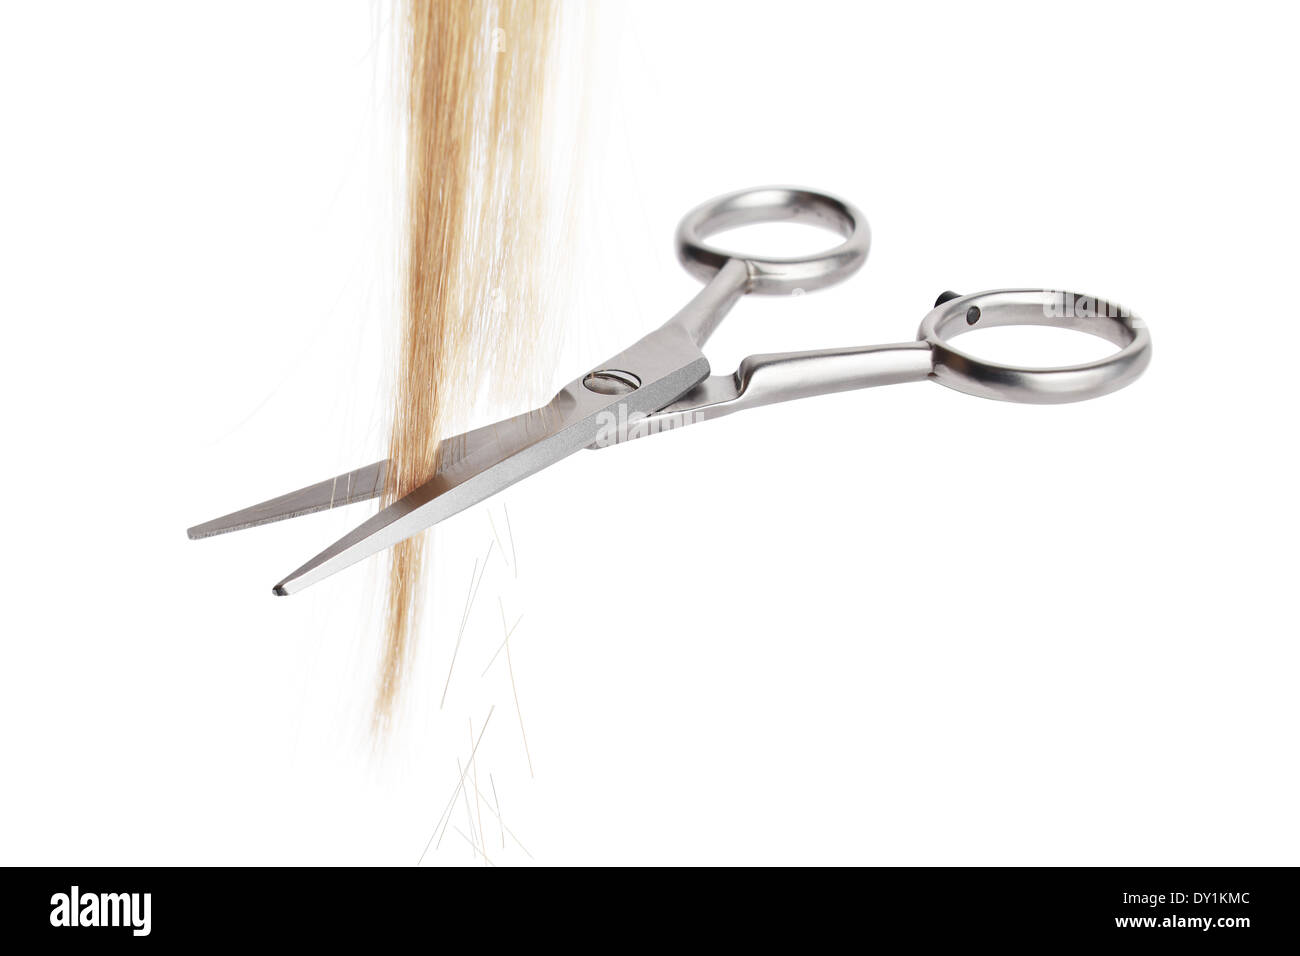 hairdresser scissors cutting hair Stock Photo